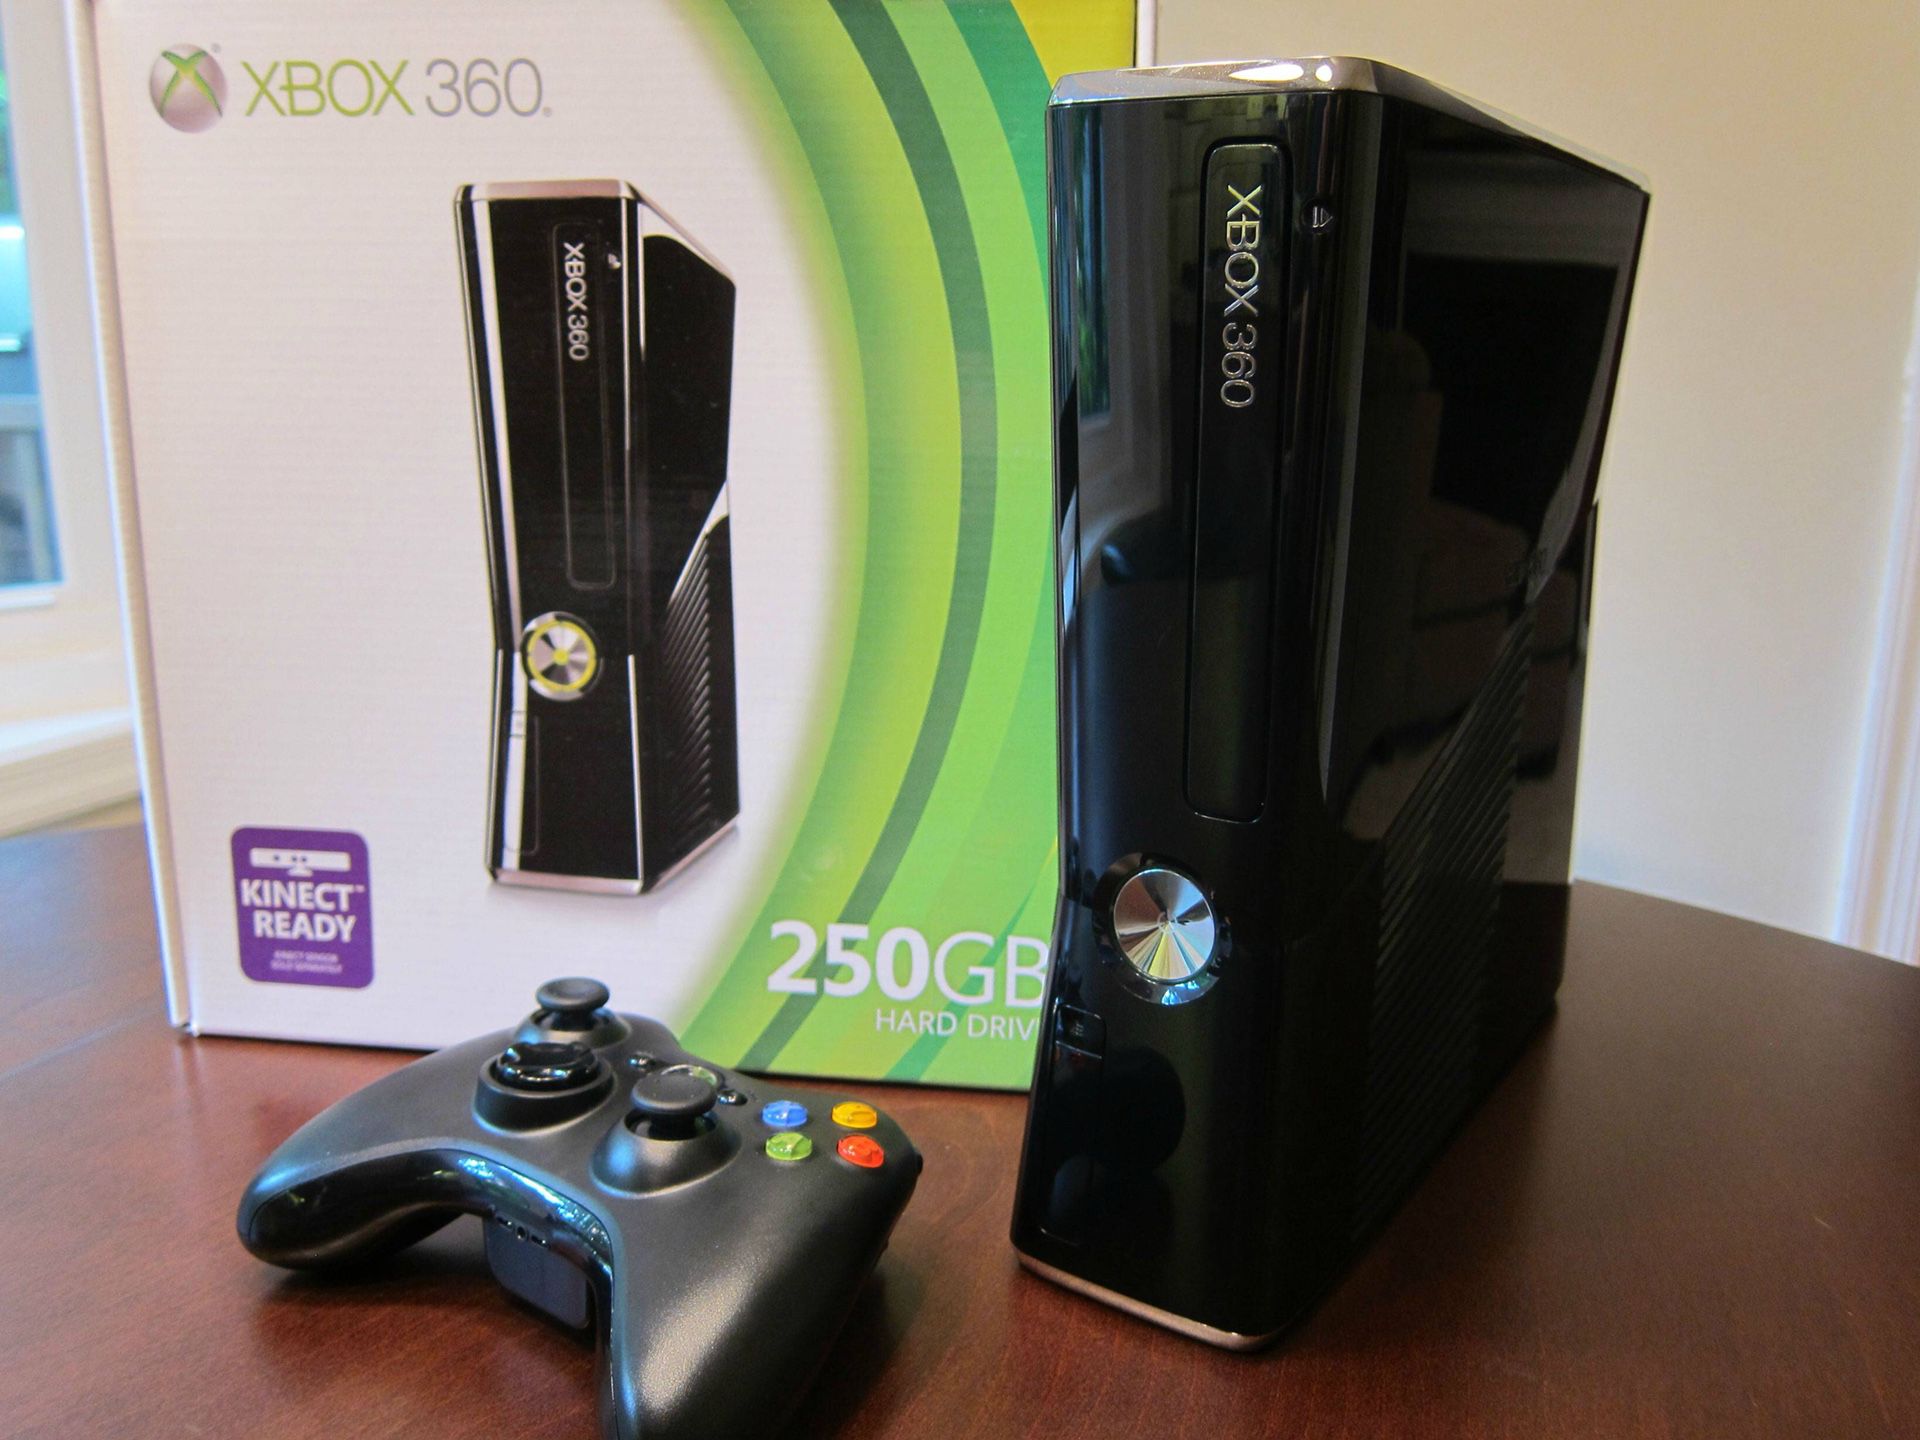 Хбох читы. Xbox 360 Slim. Приставка Xbox 360 Slim. Xbox 360 Slim e. Игровая приставка Xbox 360 250 GB.